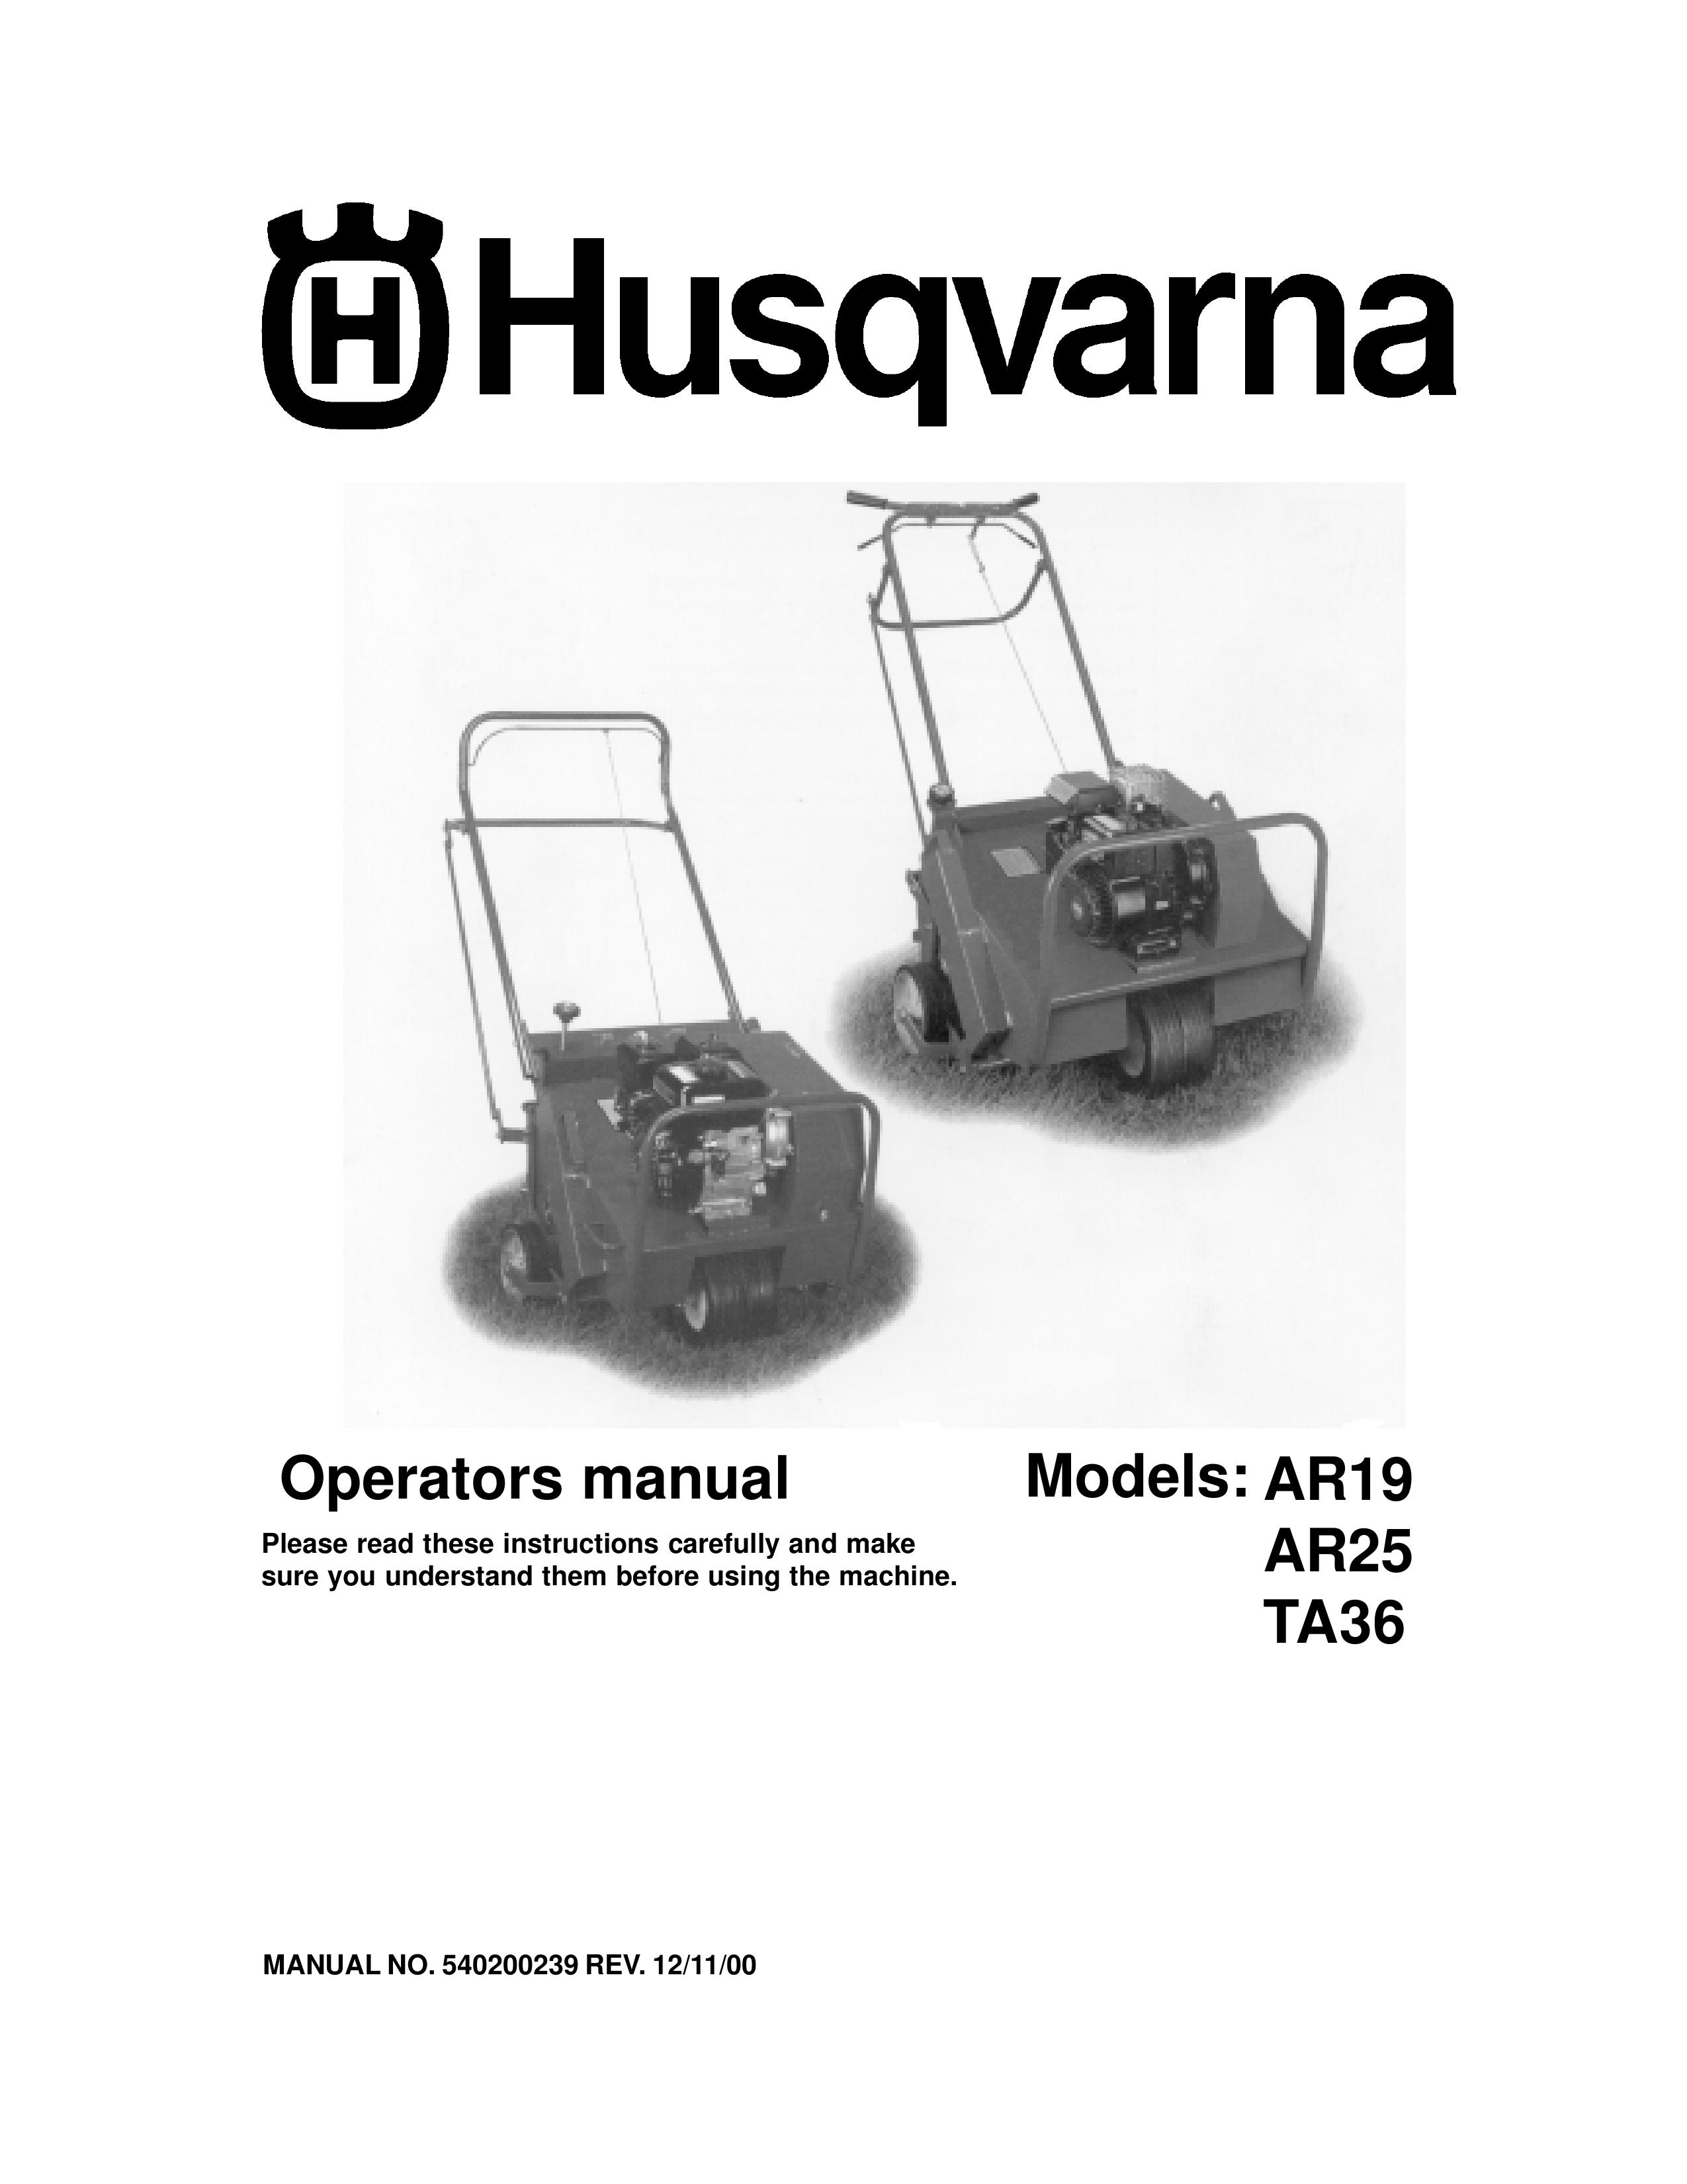 Husqvarna TA36 Lawn Aerator User Manual